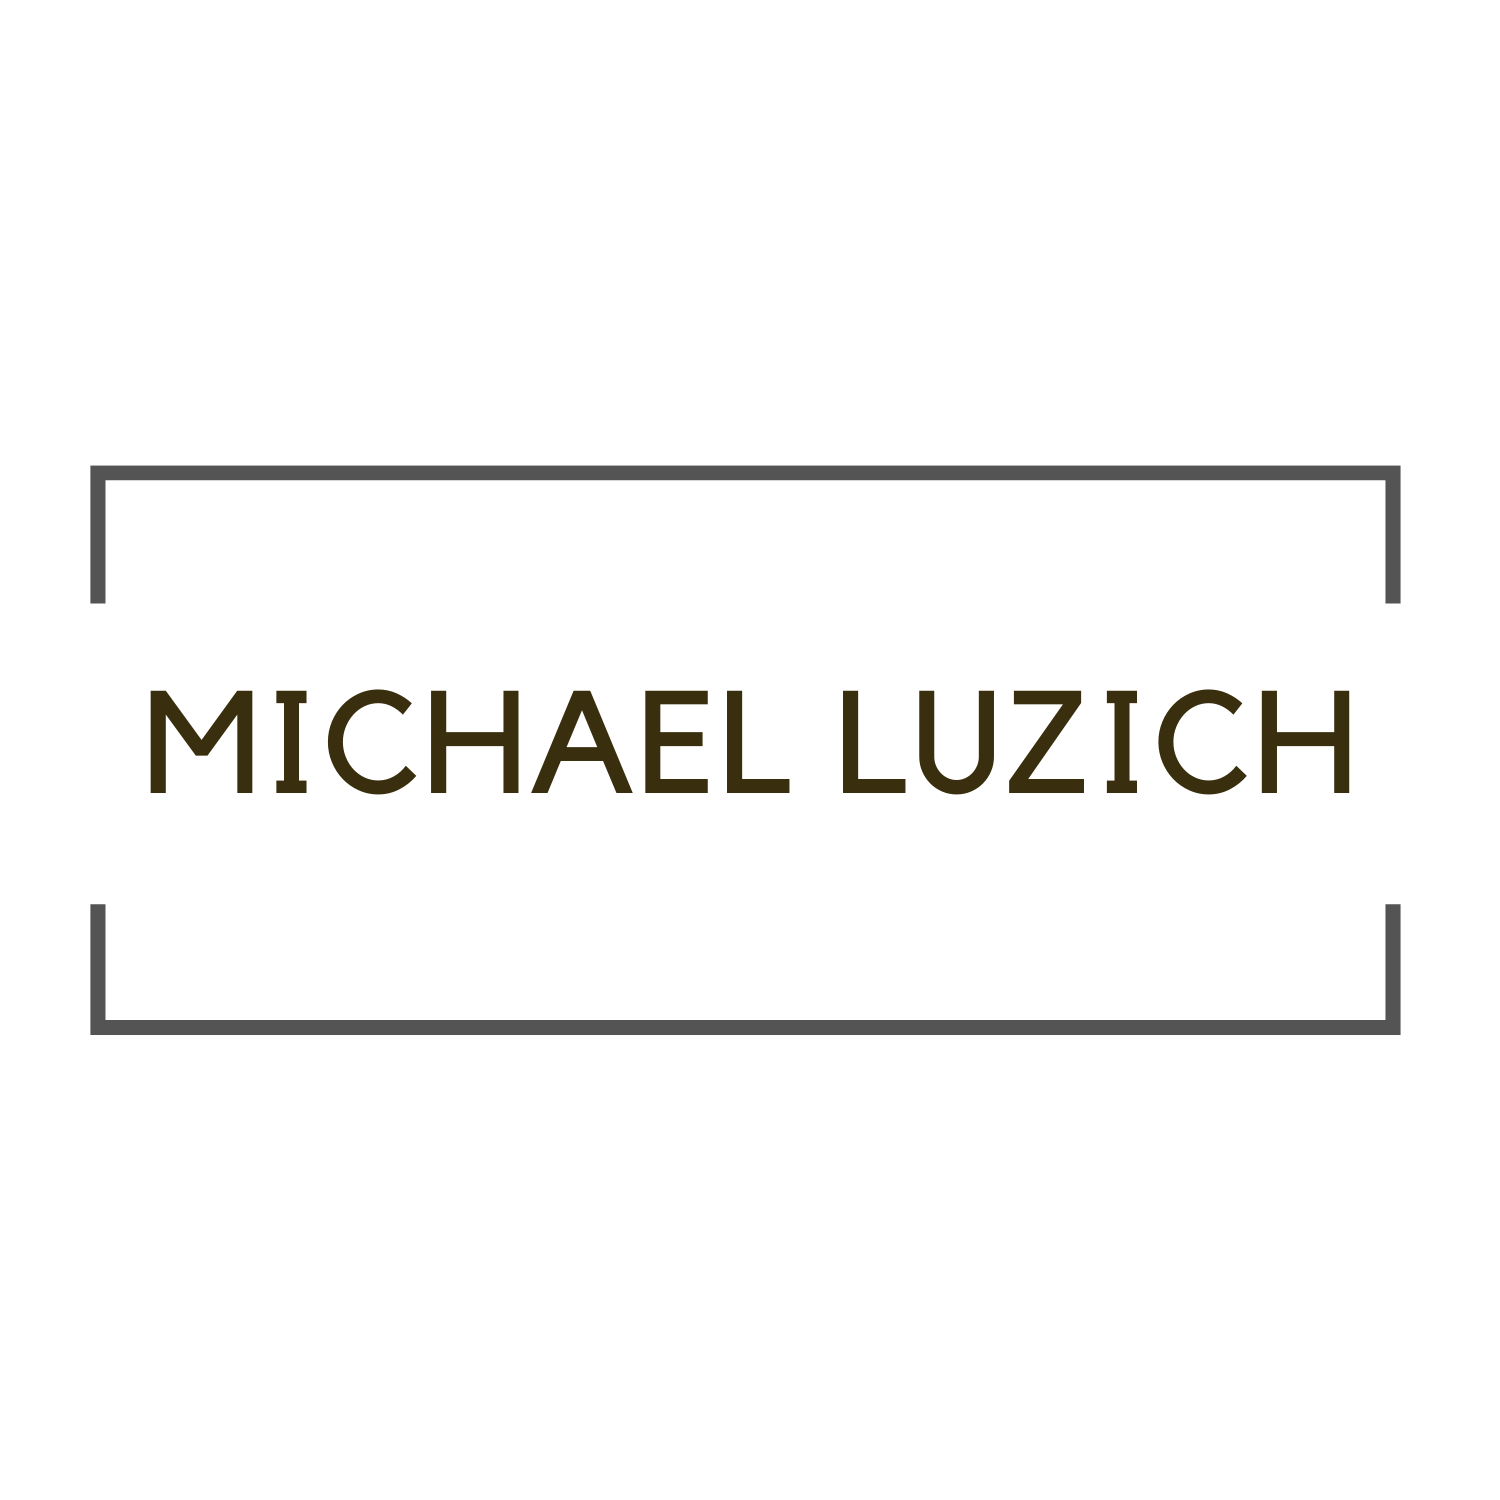 Michael Luzich | International Business